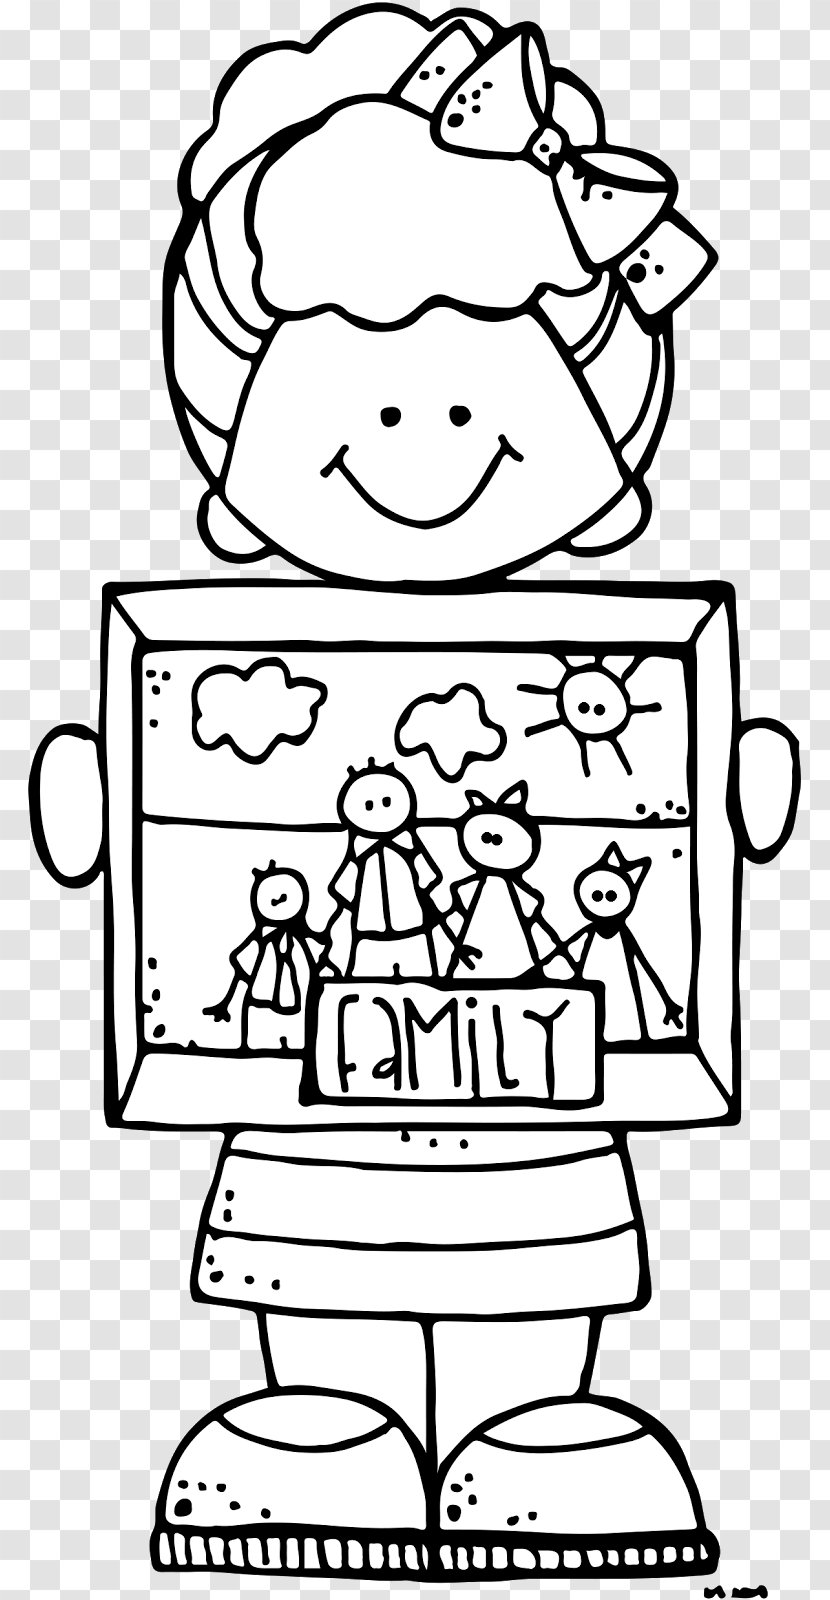 Parent Child Family Clip Art - Human Behavior - Love Each Other Transparent PNG